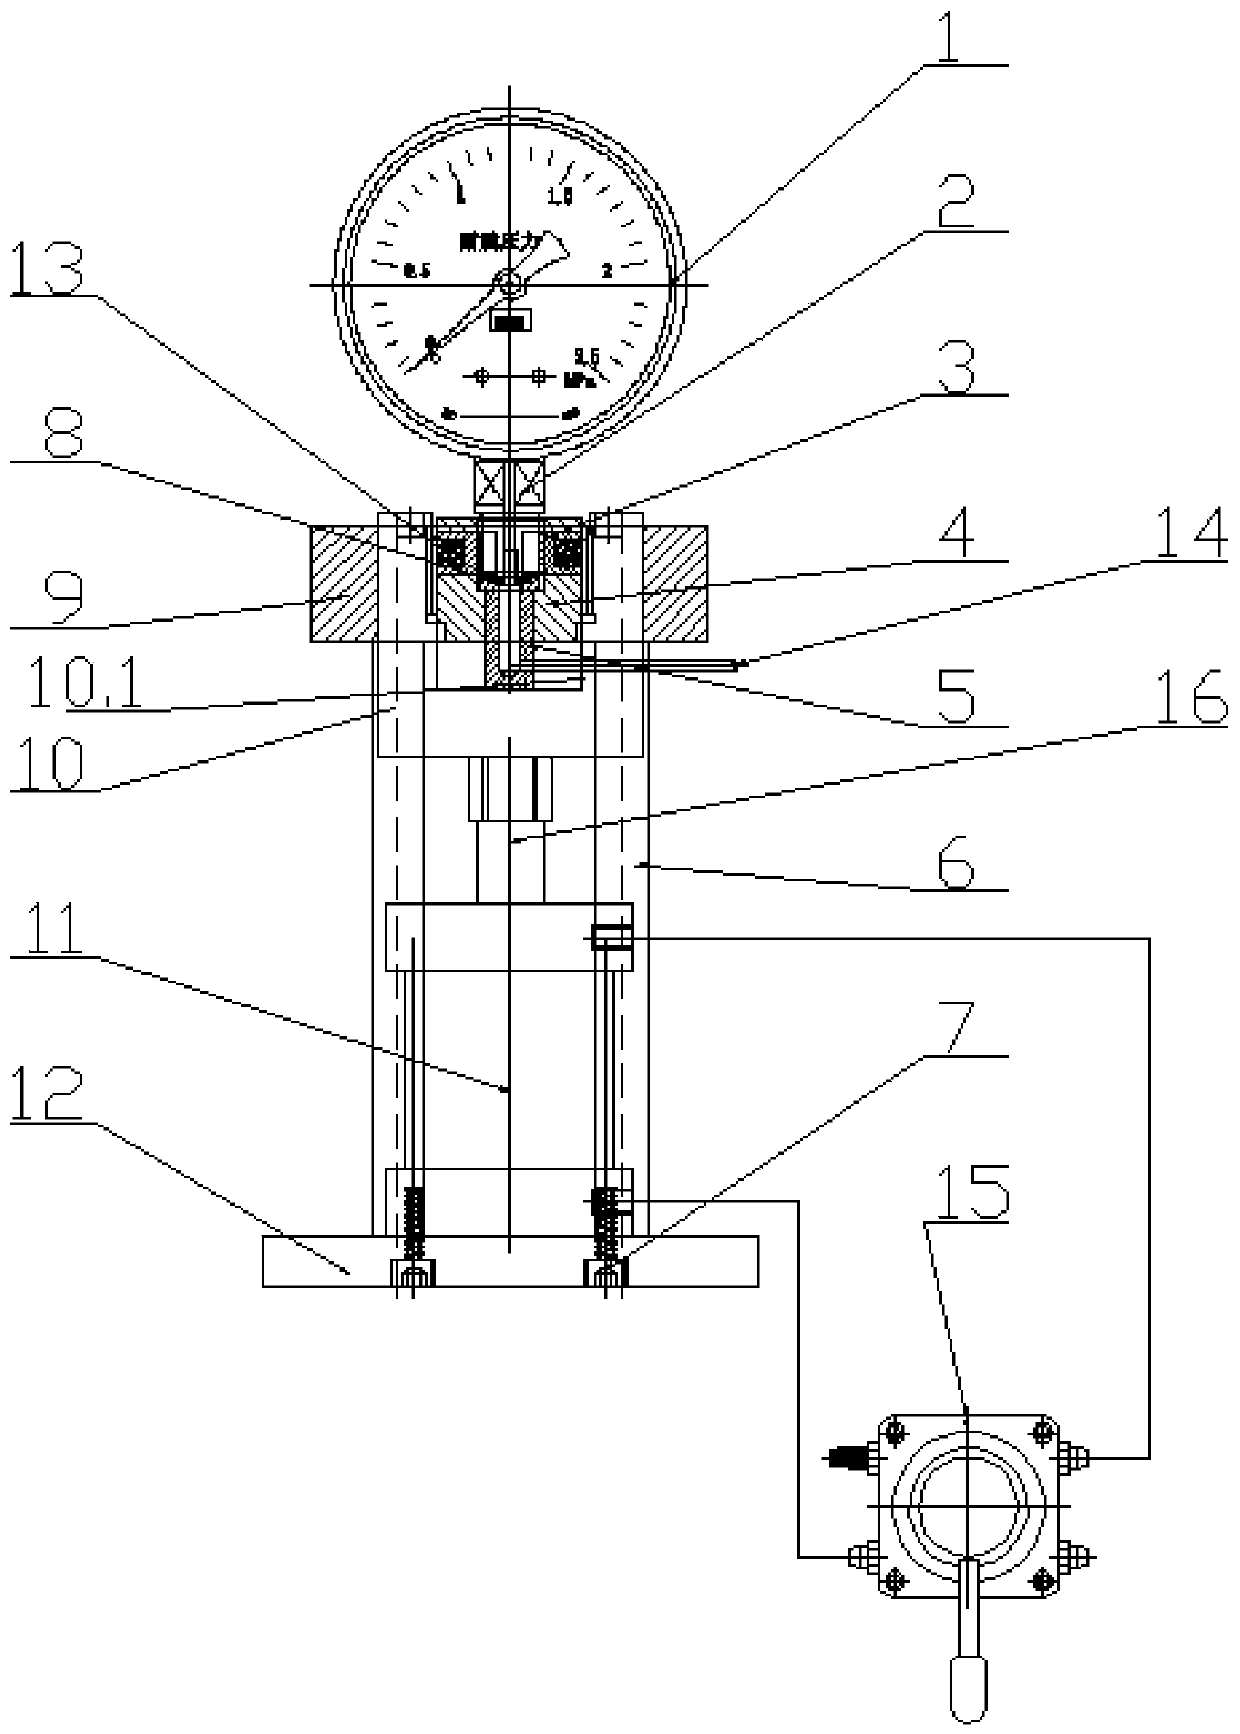 Quick sealing locking device for pressure meter